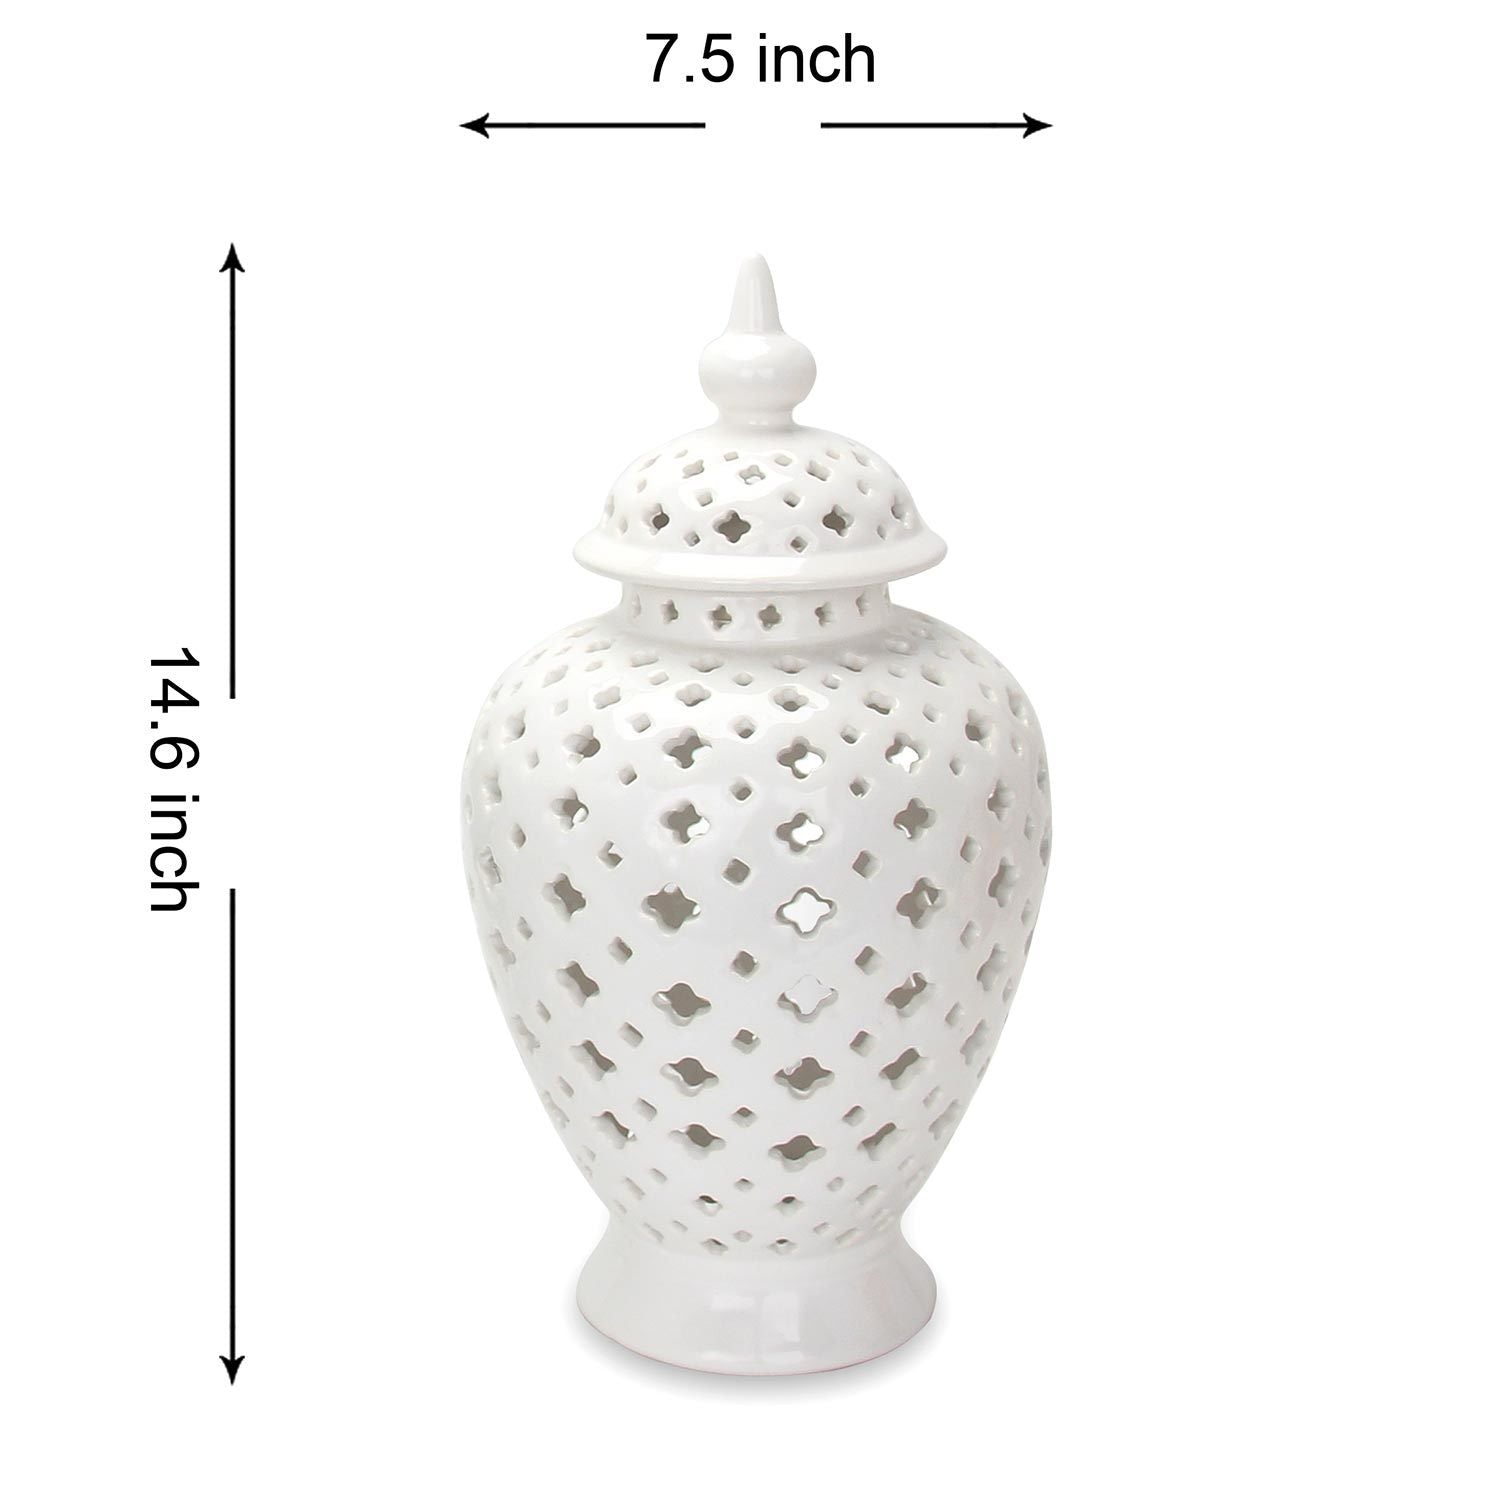 White Ceramic Ginger Jar Vase with Decorative Design and Removable Lid